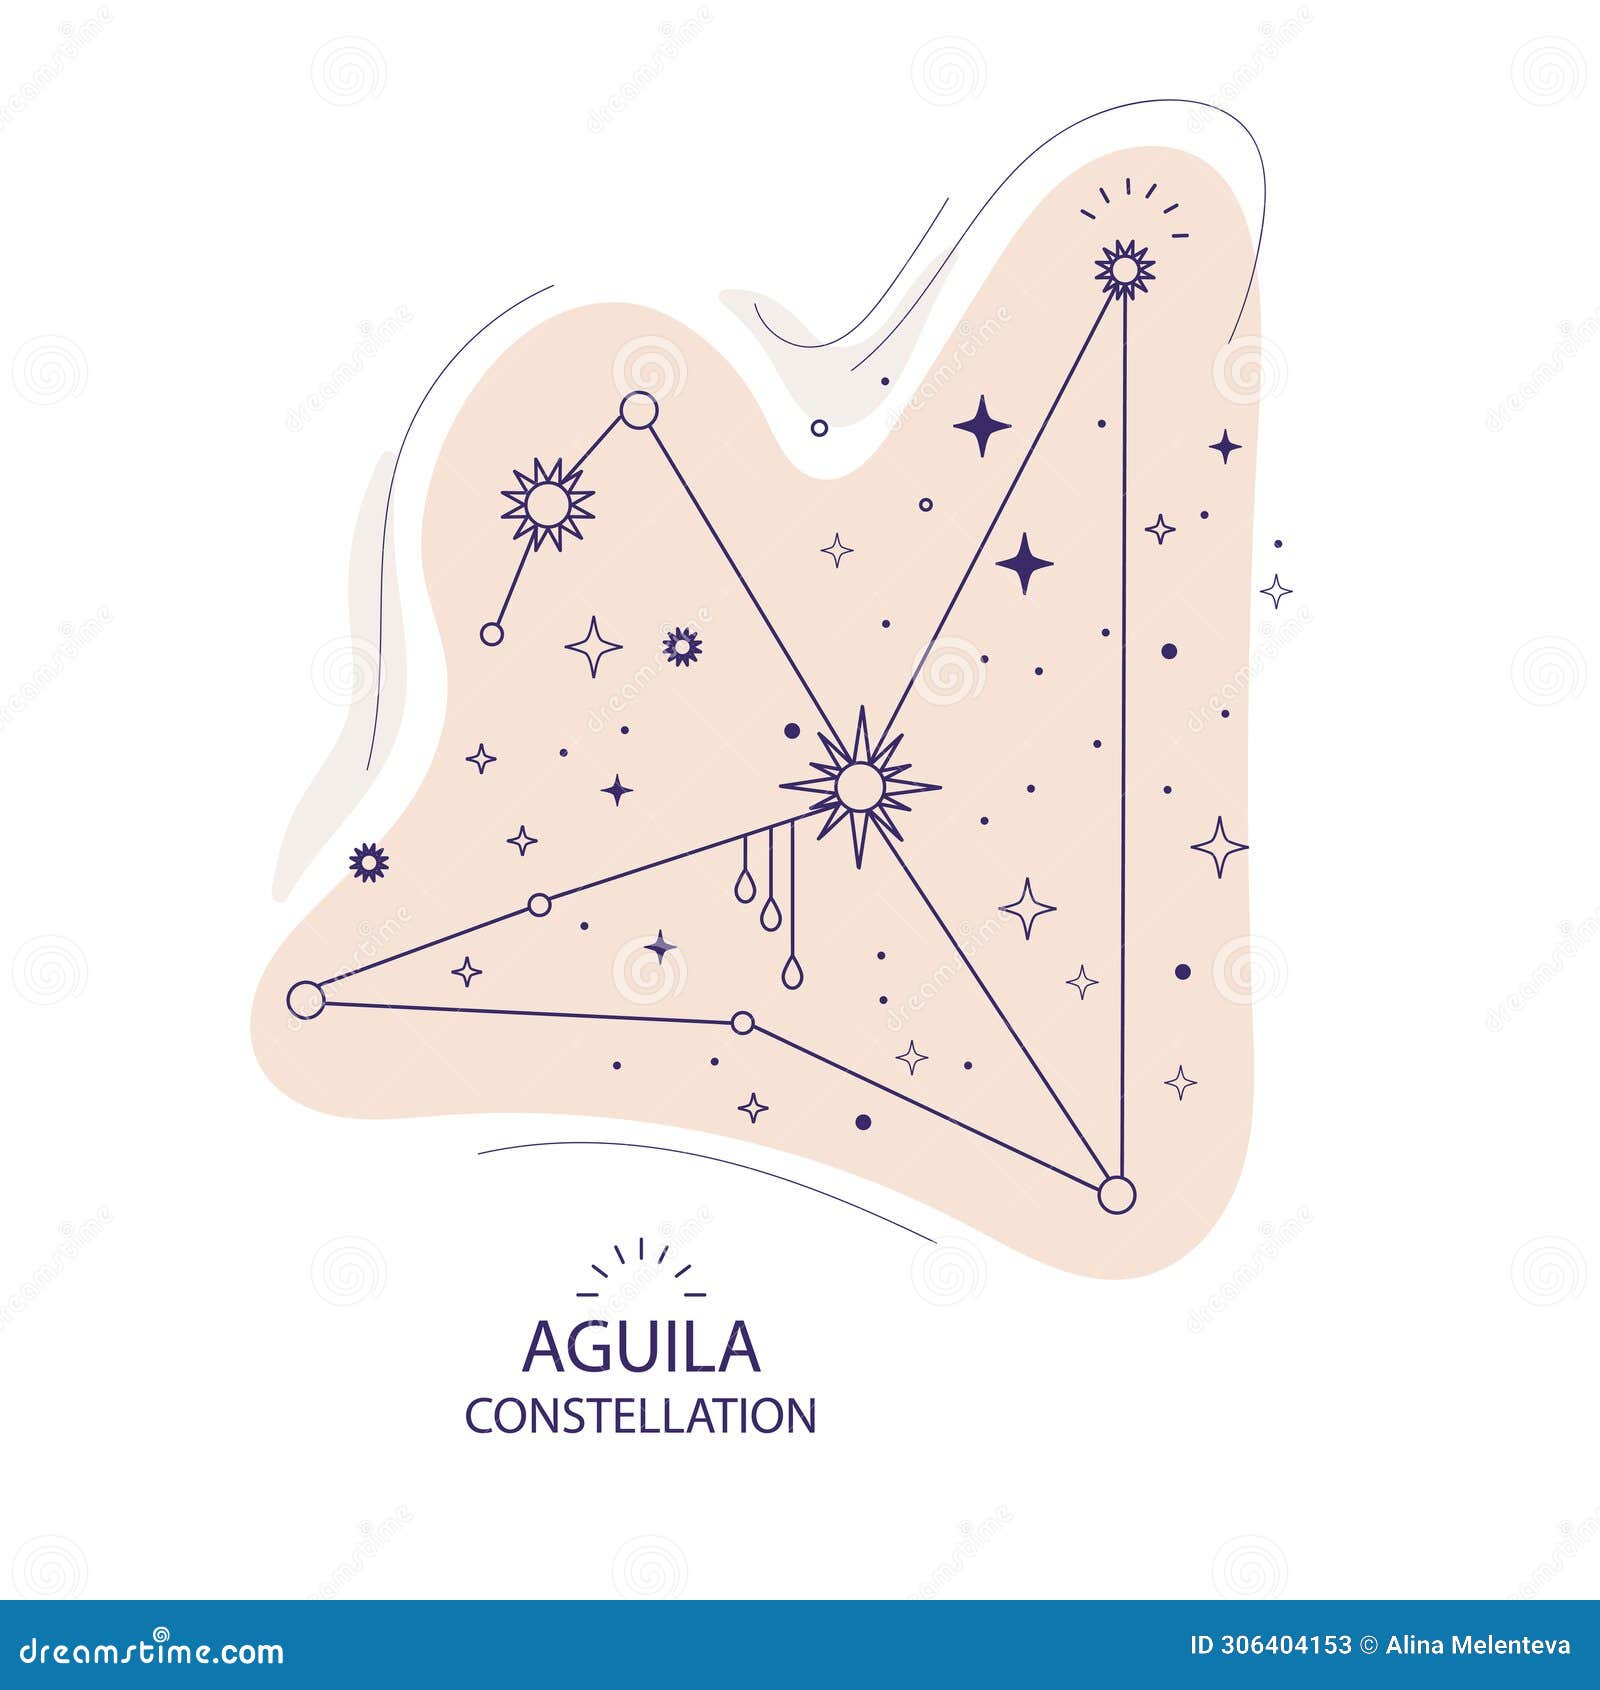 star constellation aguila  